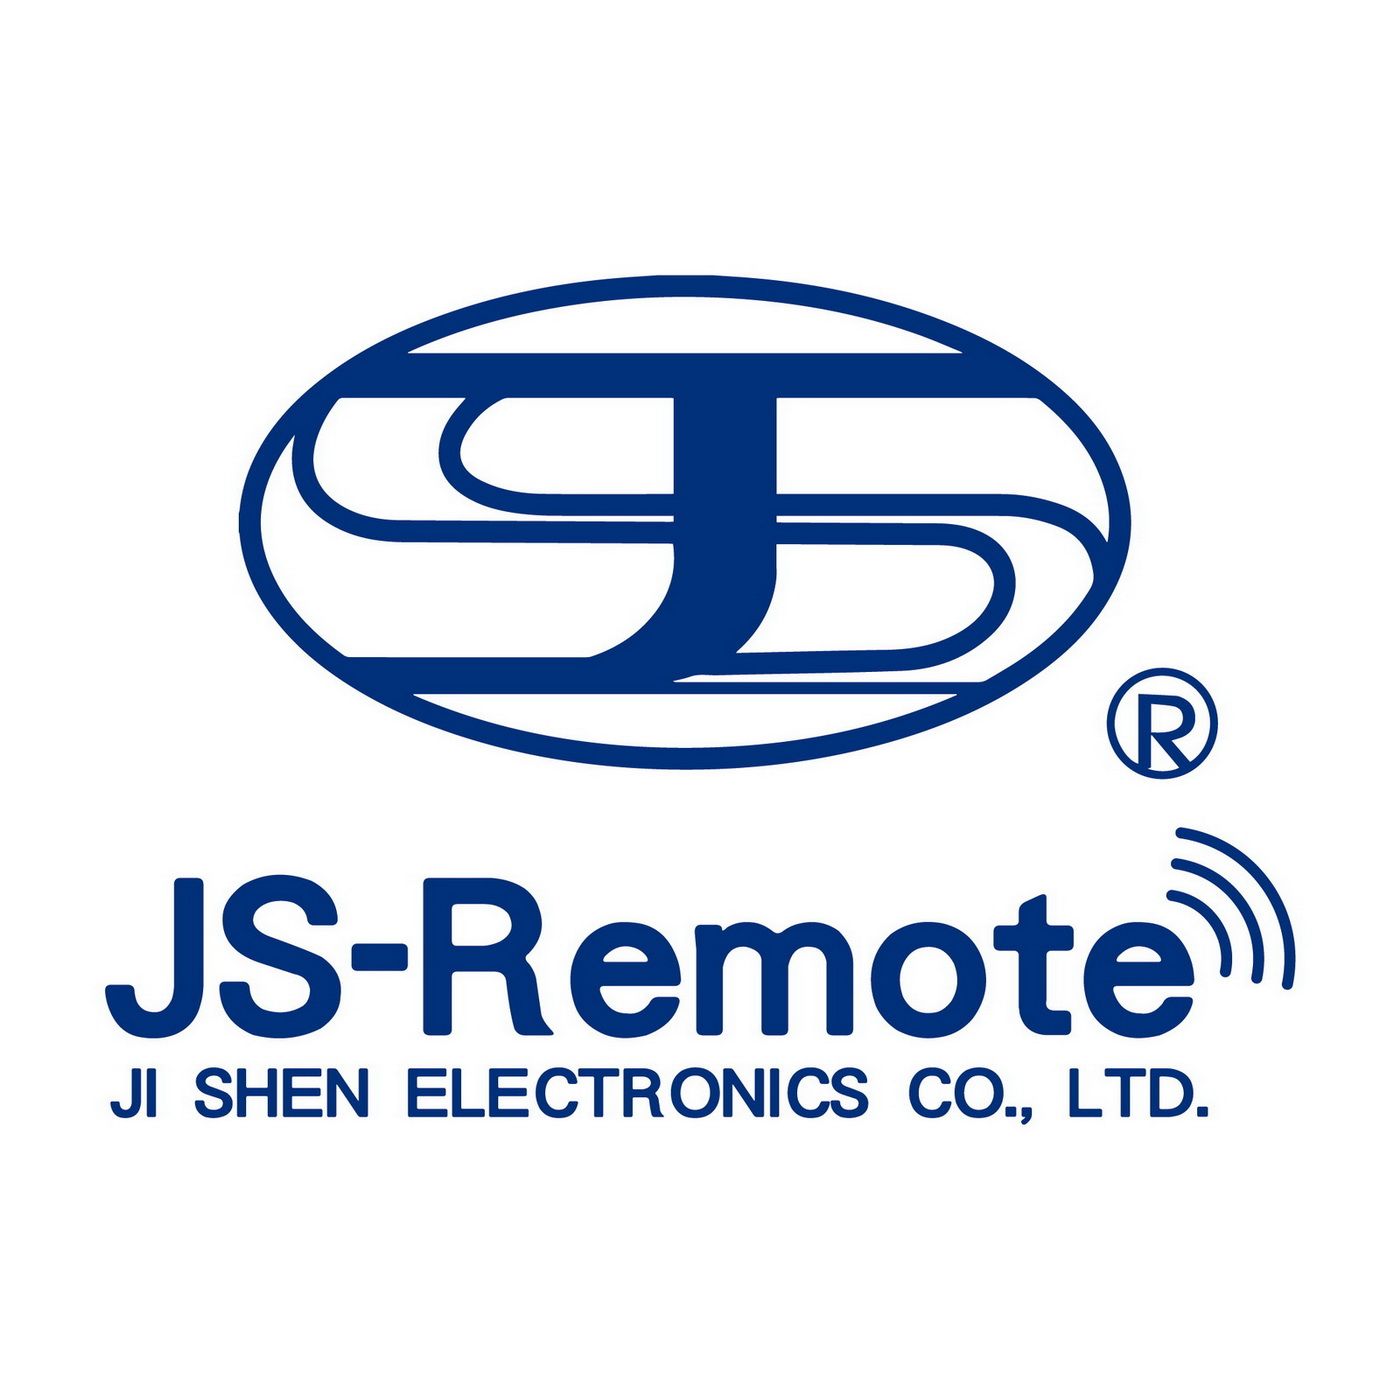 JI-SHEN Electronics Co., Ltd. logo